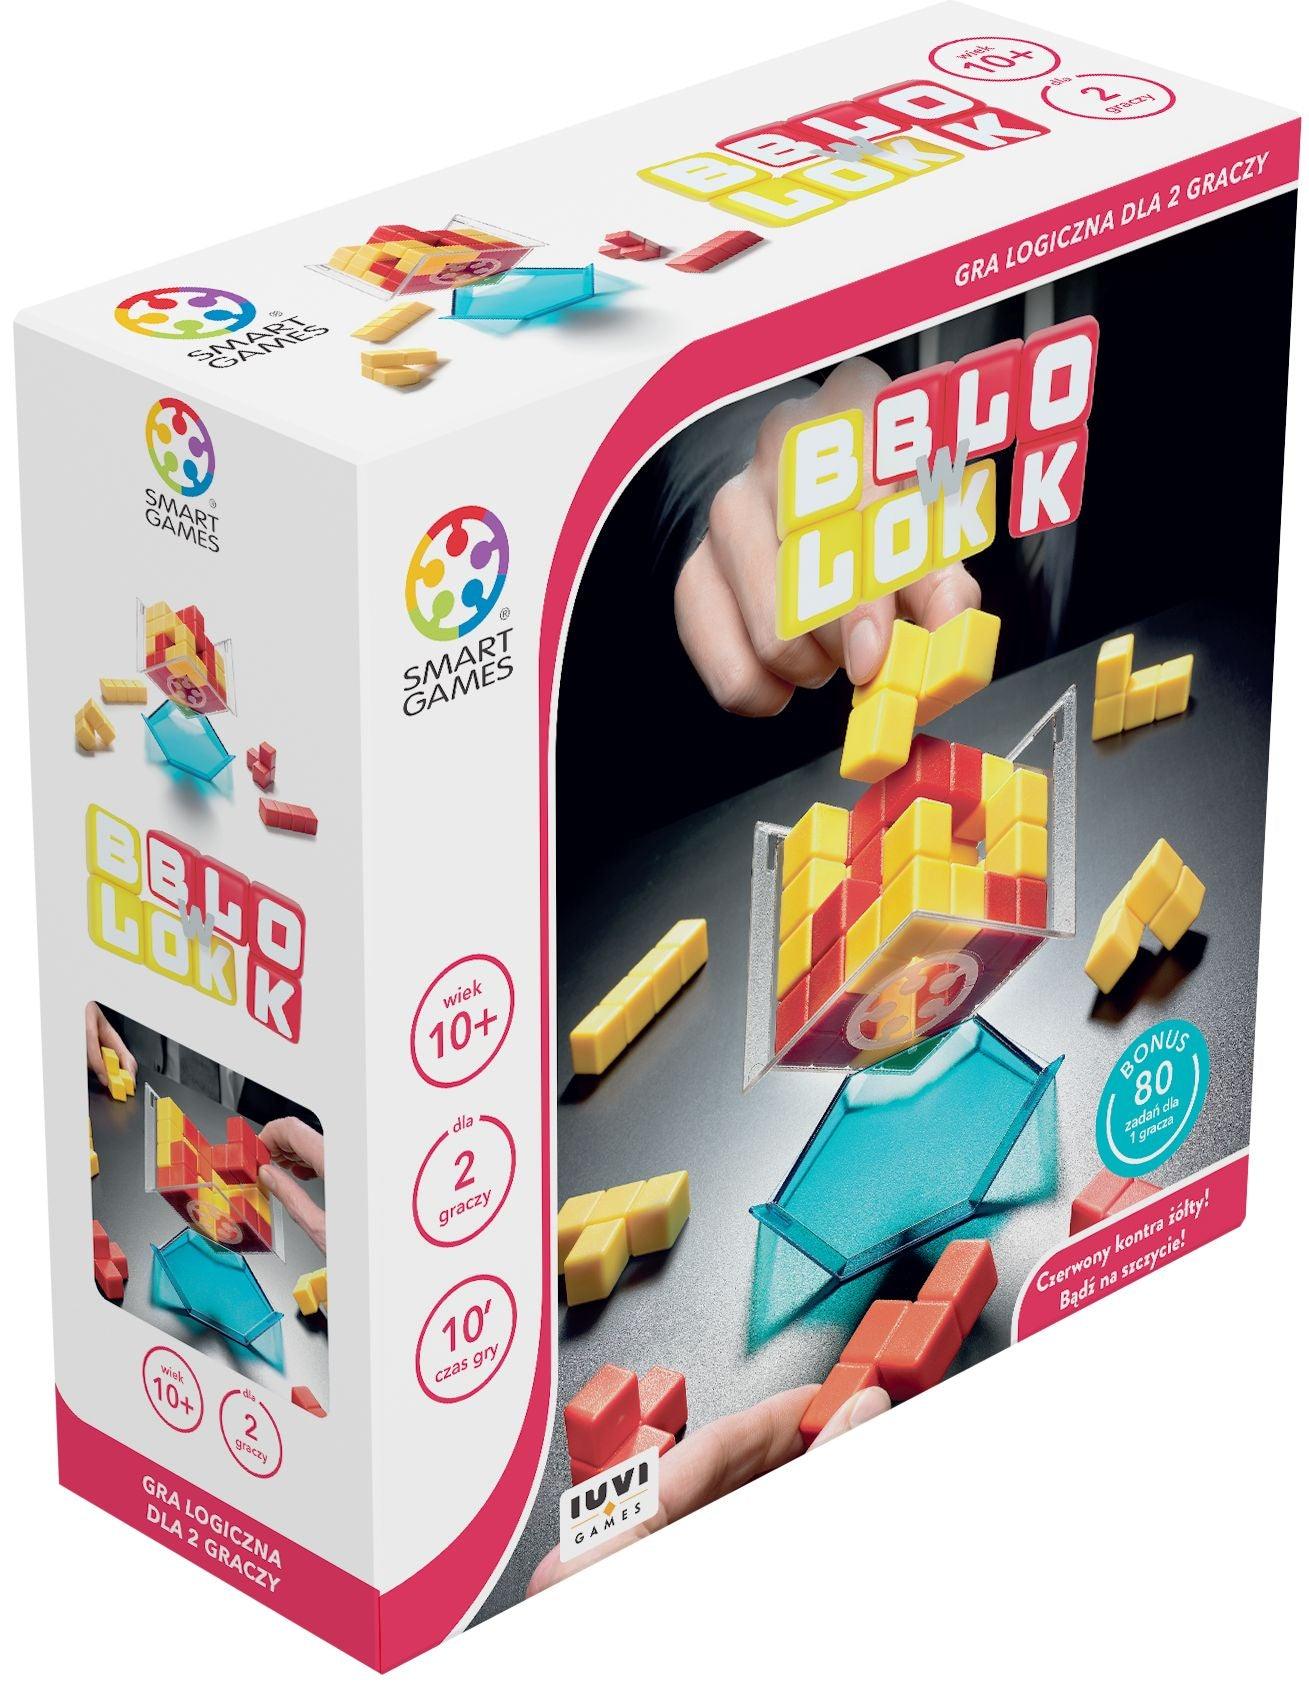 IUVI Games: gra strategiczna Blok w Blok Smart Games - Noski Noski